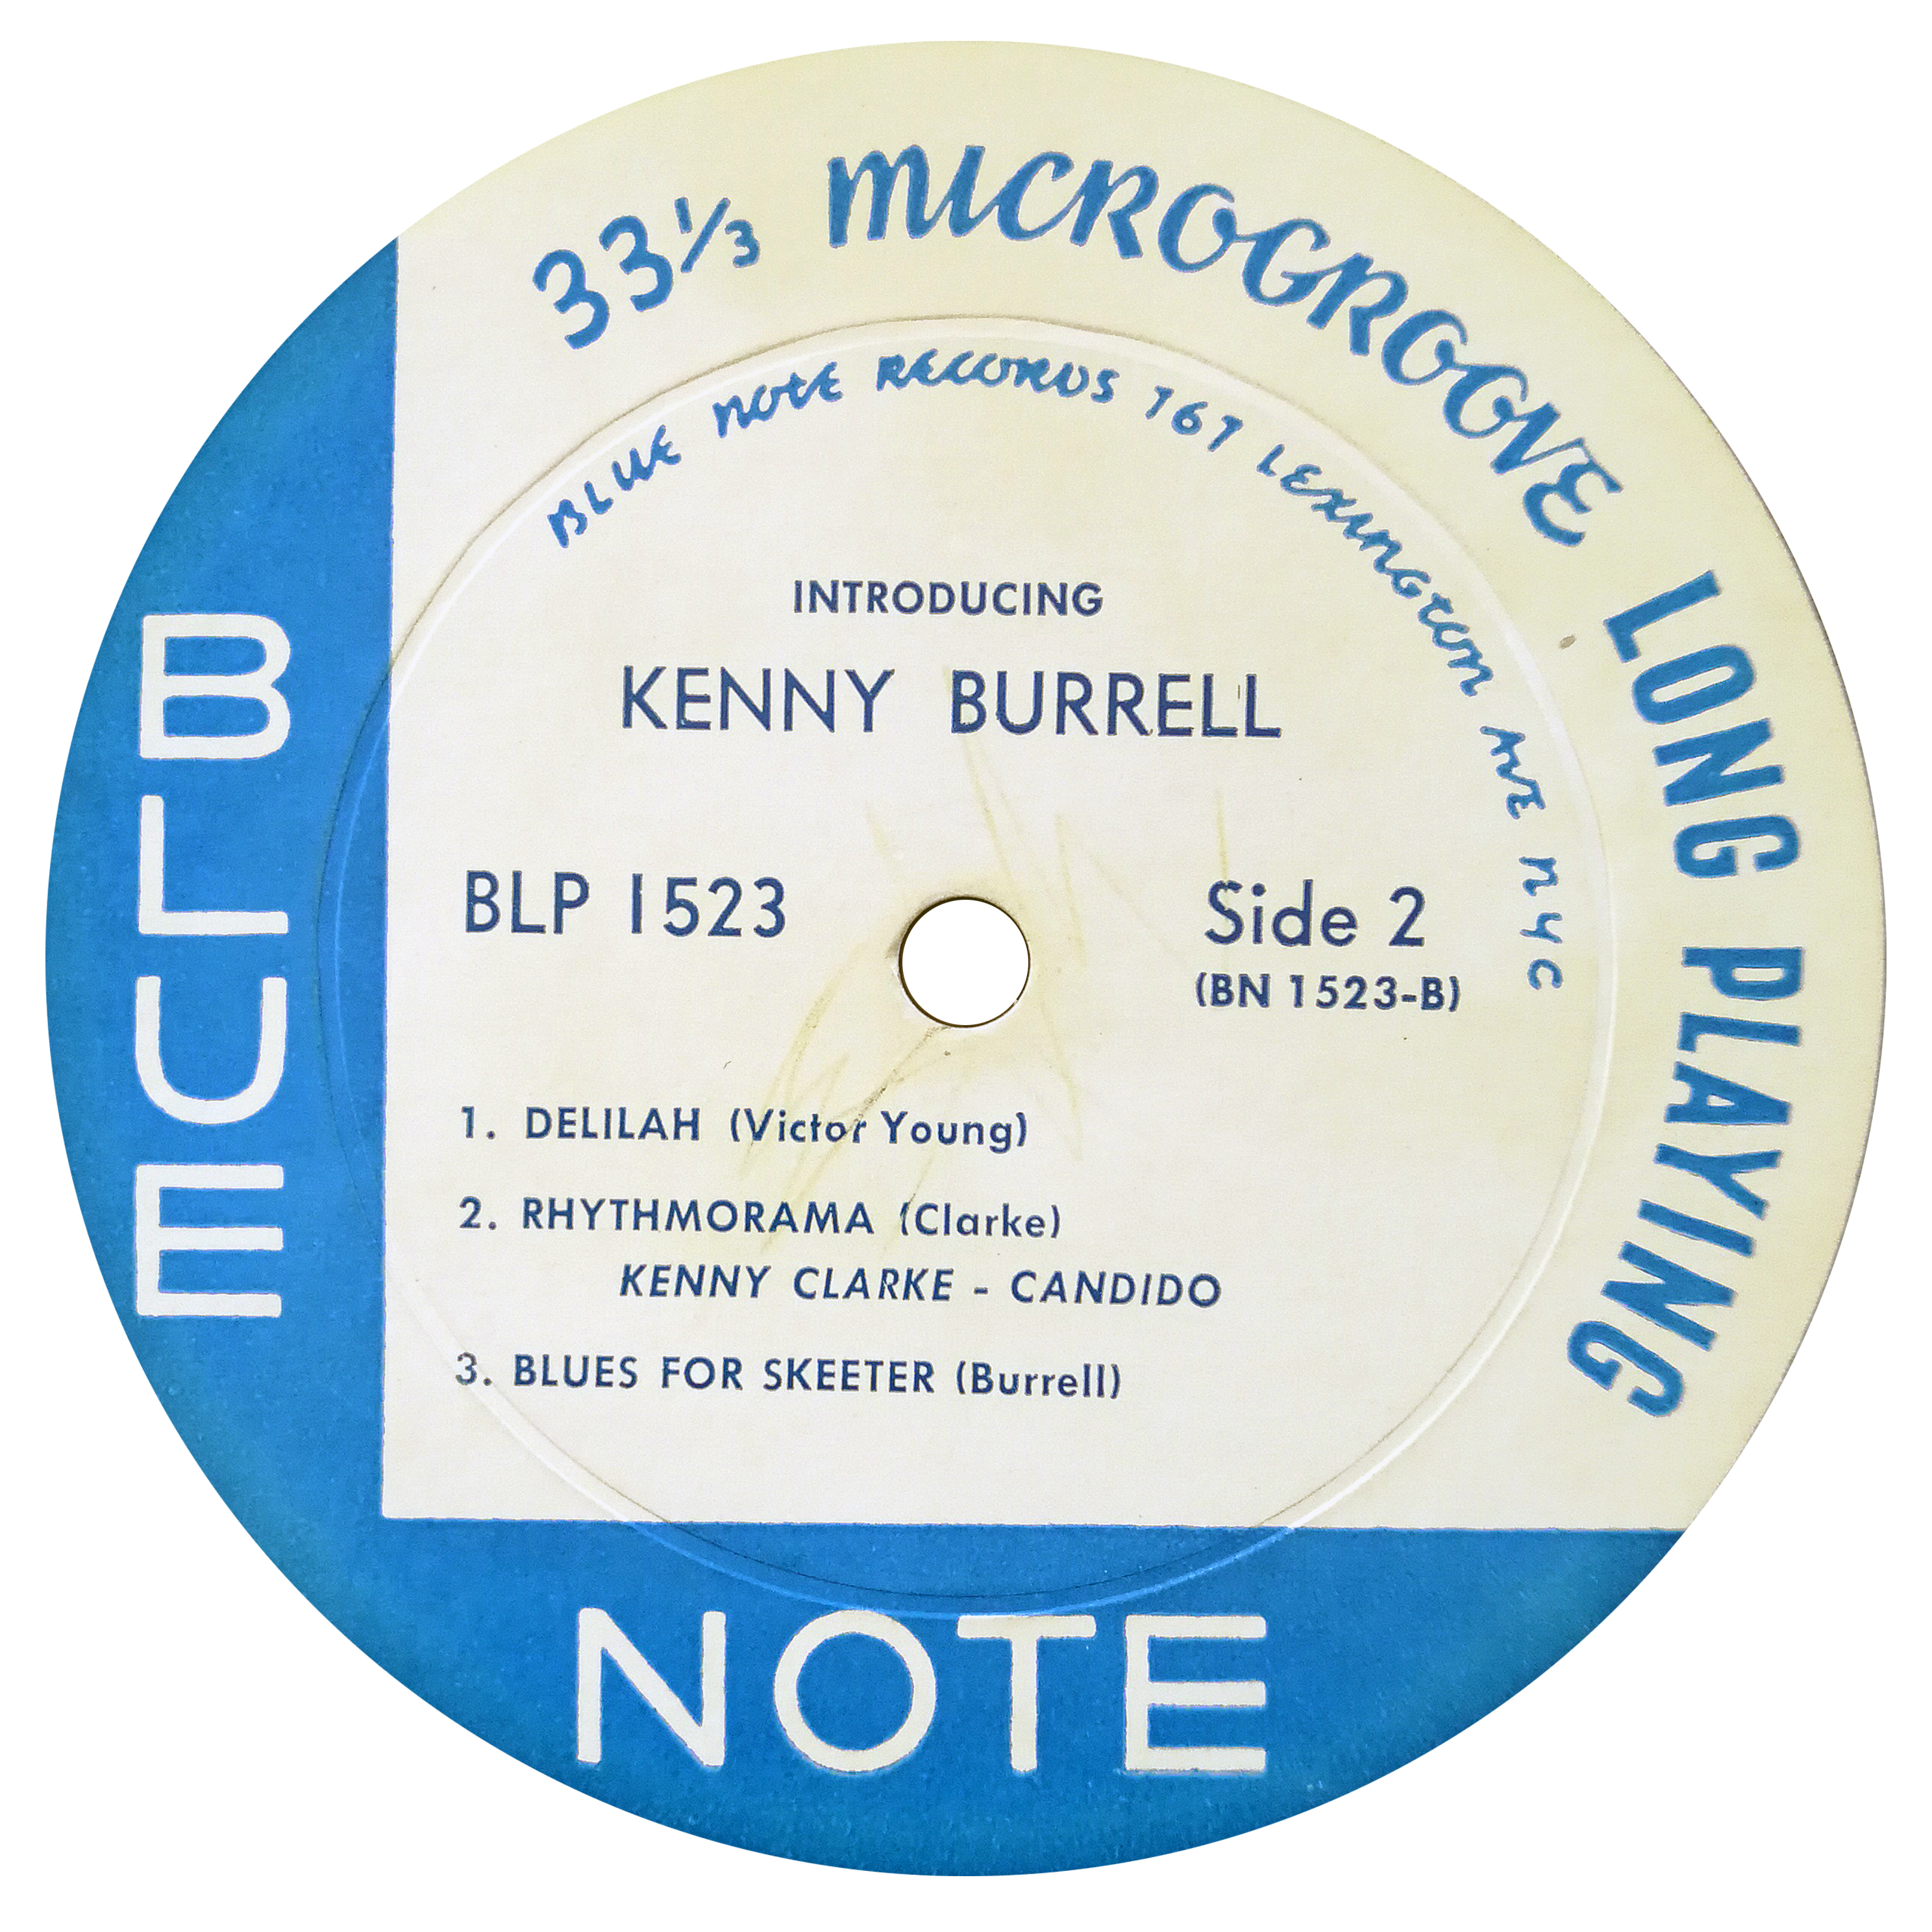 KENNY BURRELL ?INTRODUCING KENNY BURRELL3